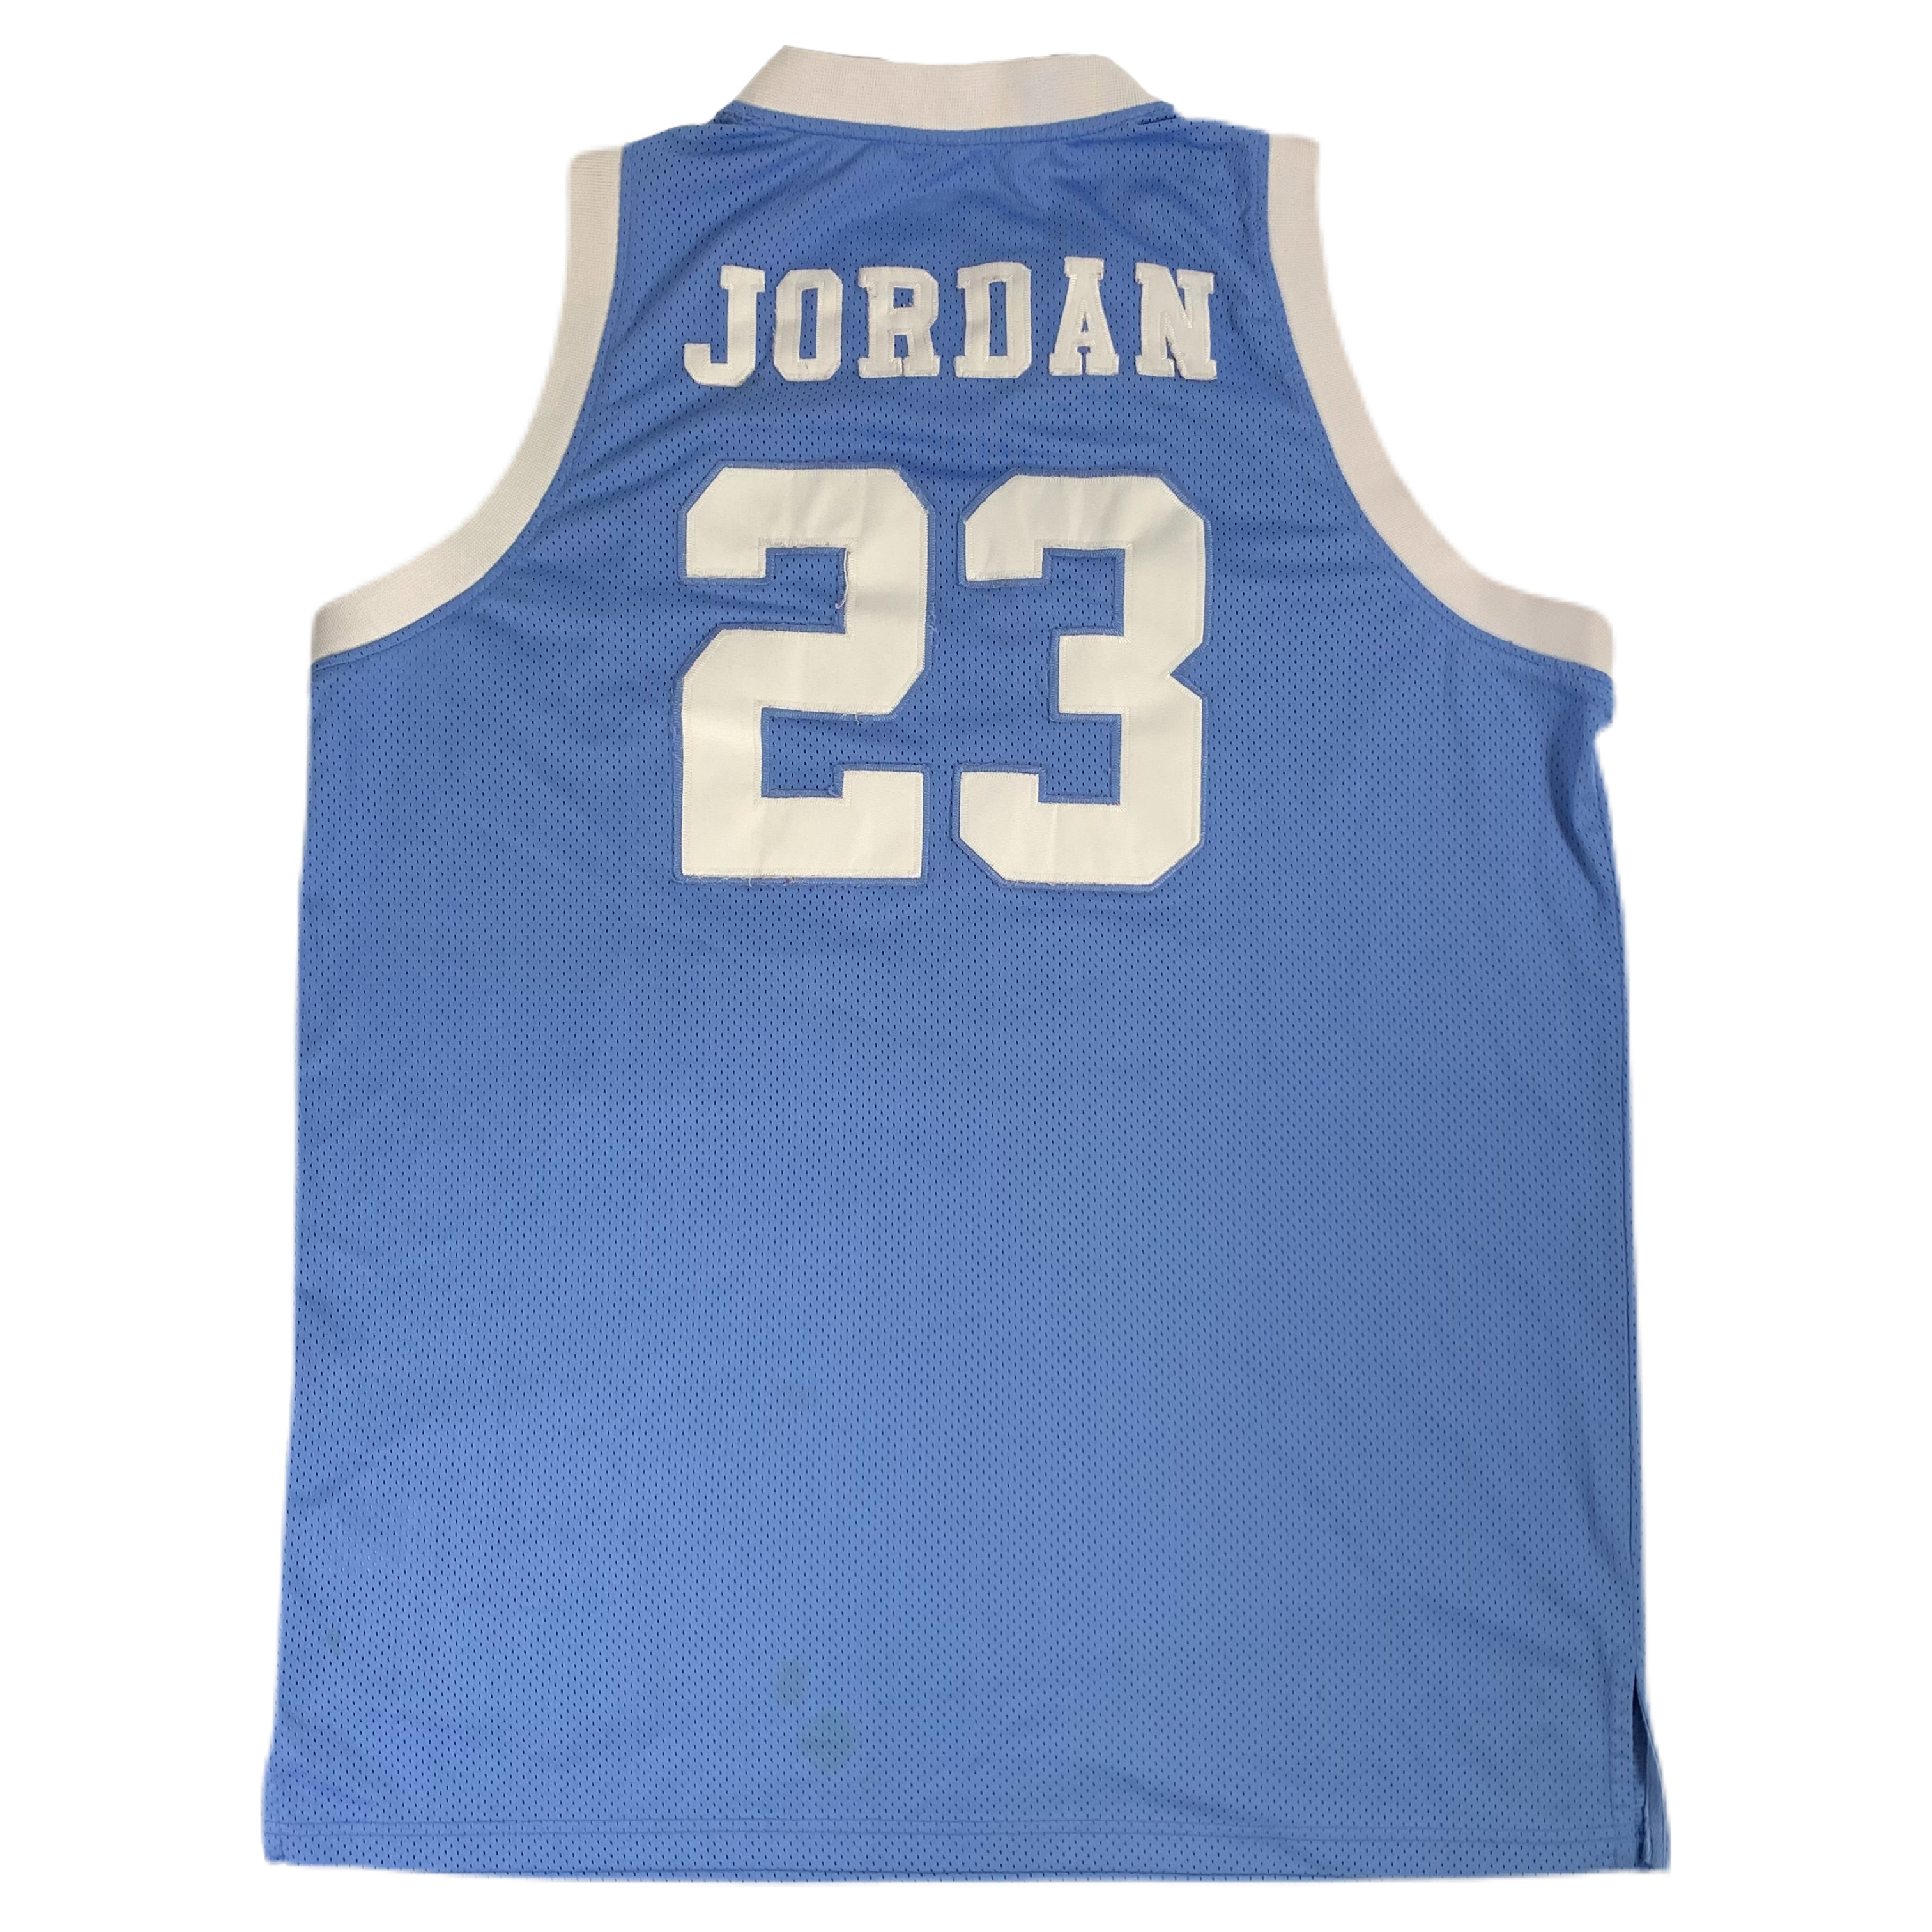 New UNC Michael Jordan Jersey